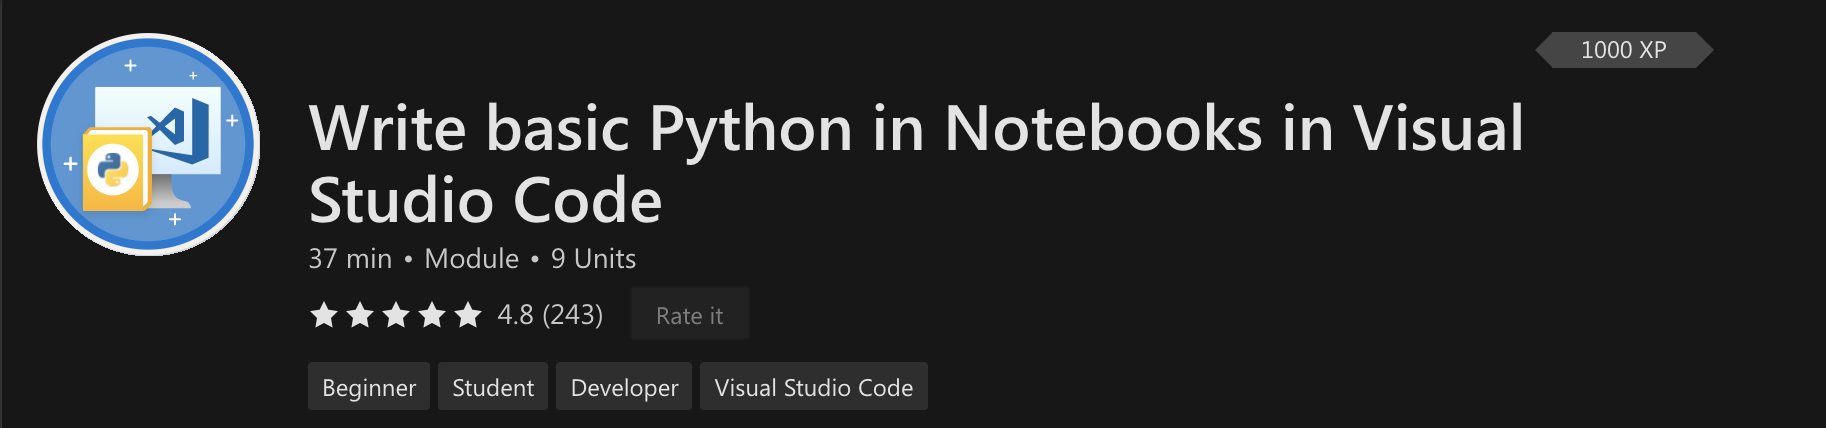 Python module